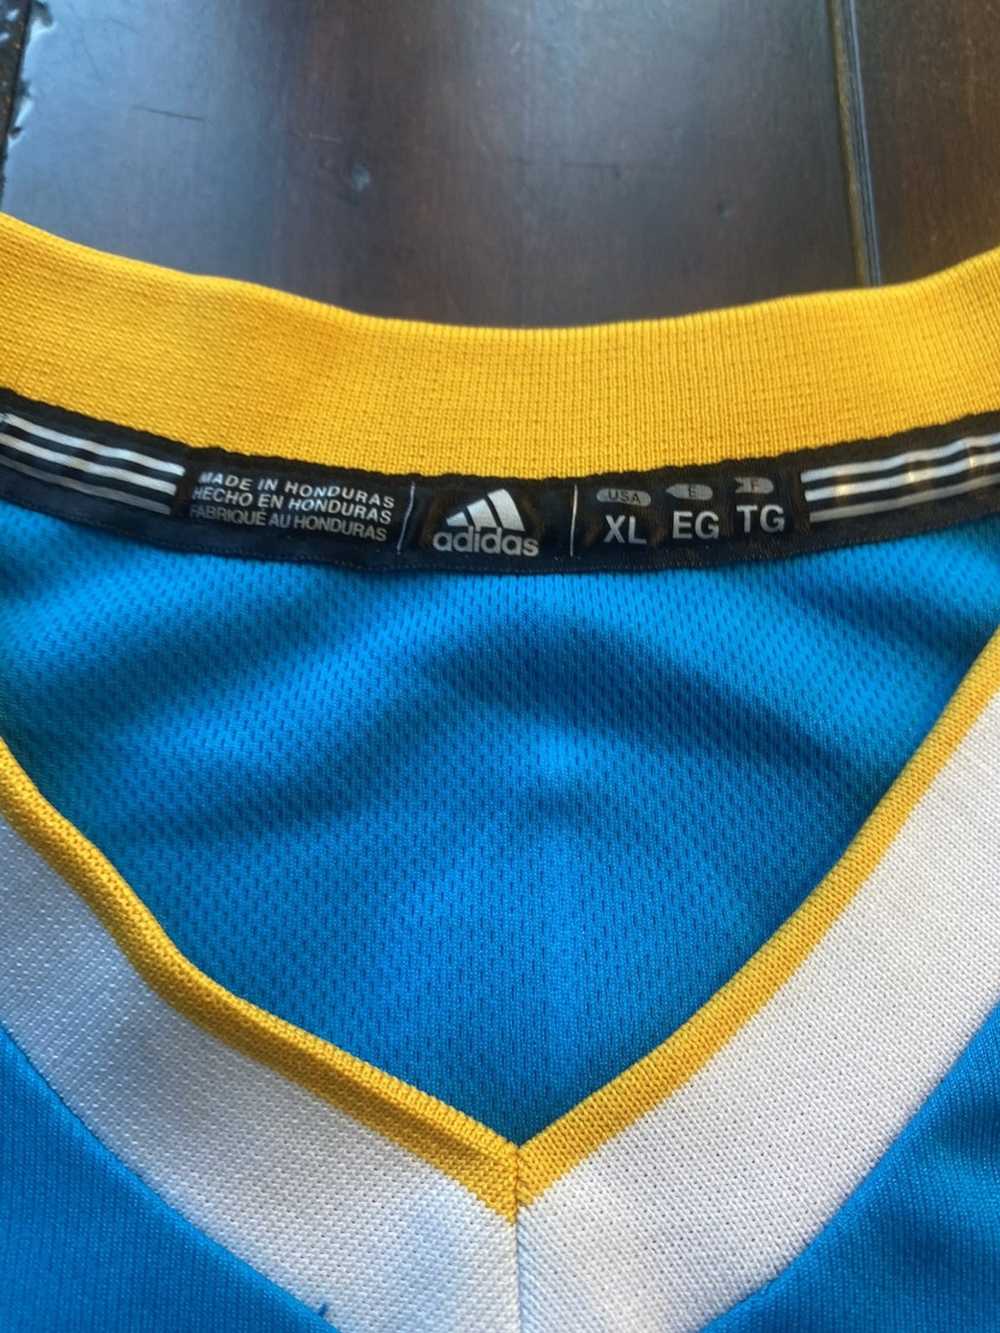 Adidas × NBA #23 Anthony Davis Retro Jersey - image 4